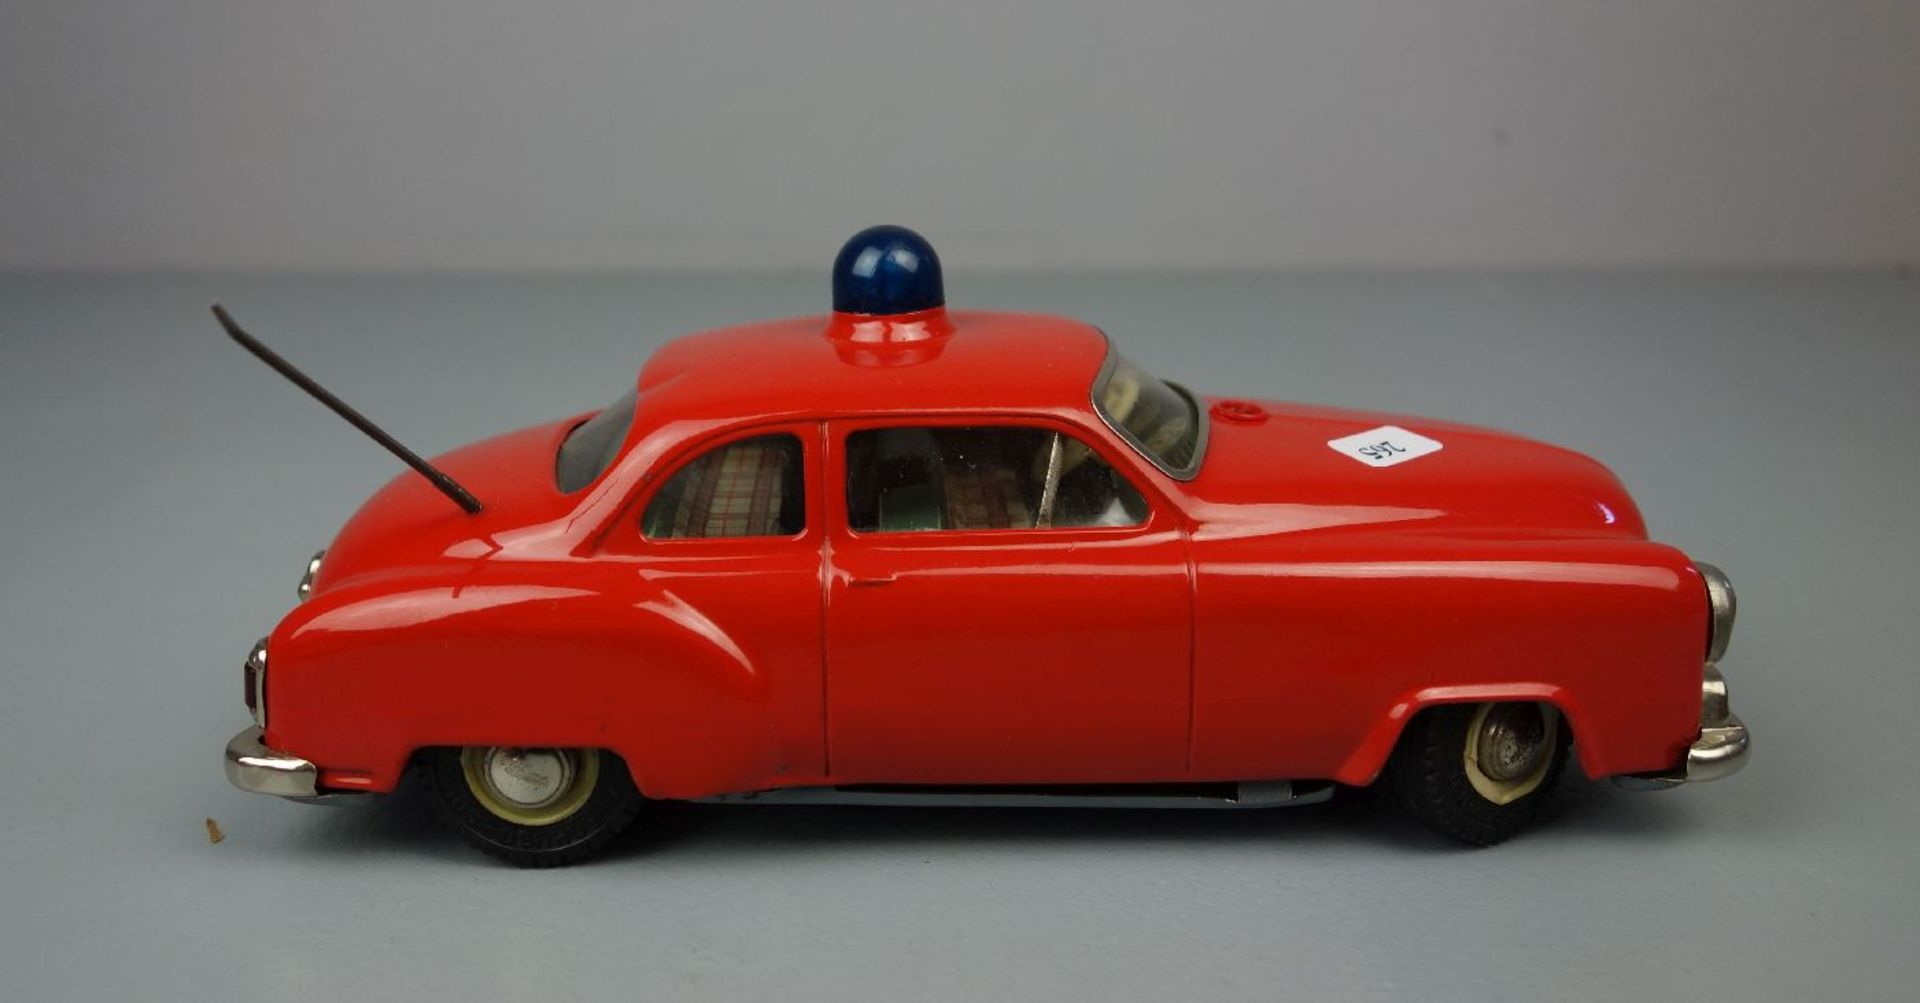 BLECHSPIELZEUG / FAHRZEUG: Polizeiauto / Alarm-Car 5340 / tin toy police car, Manufaktur Schuco - - Bild 4 aus 7